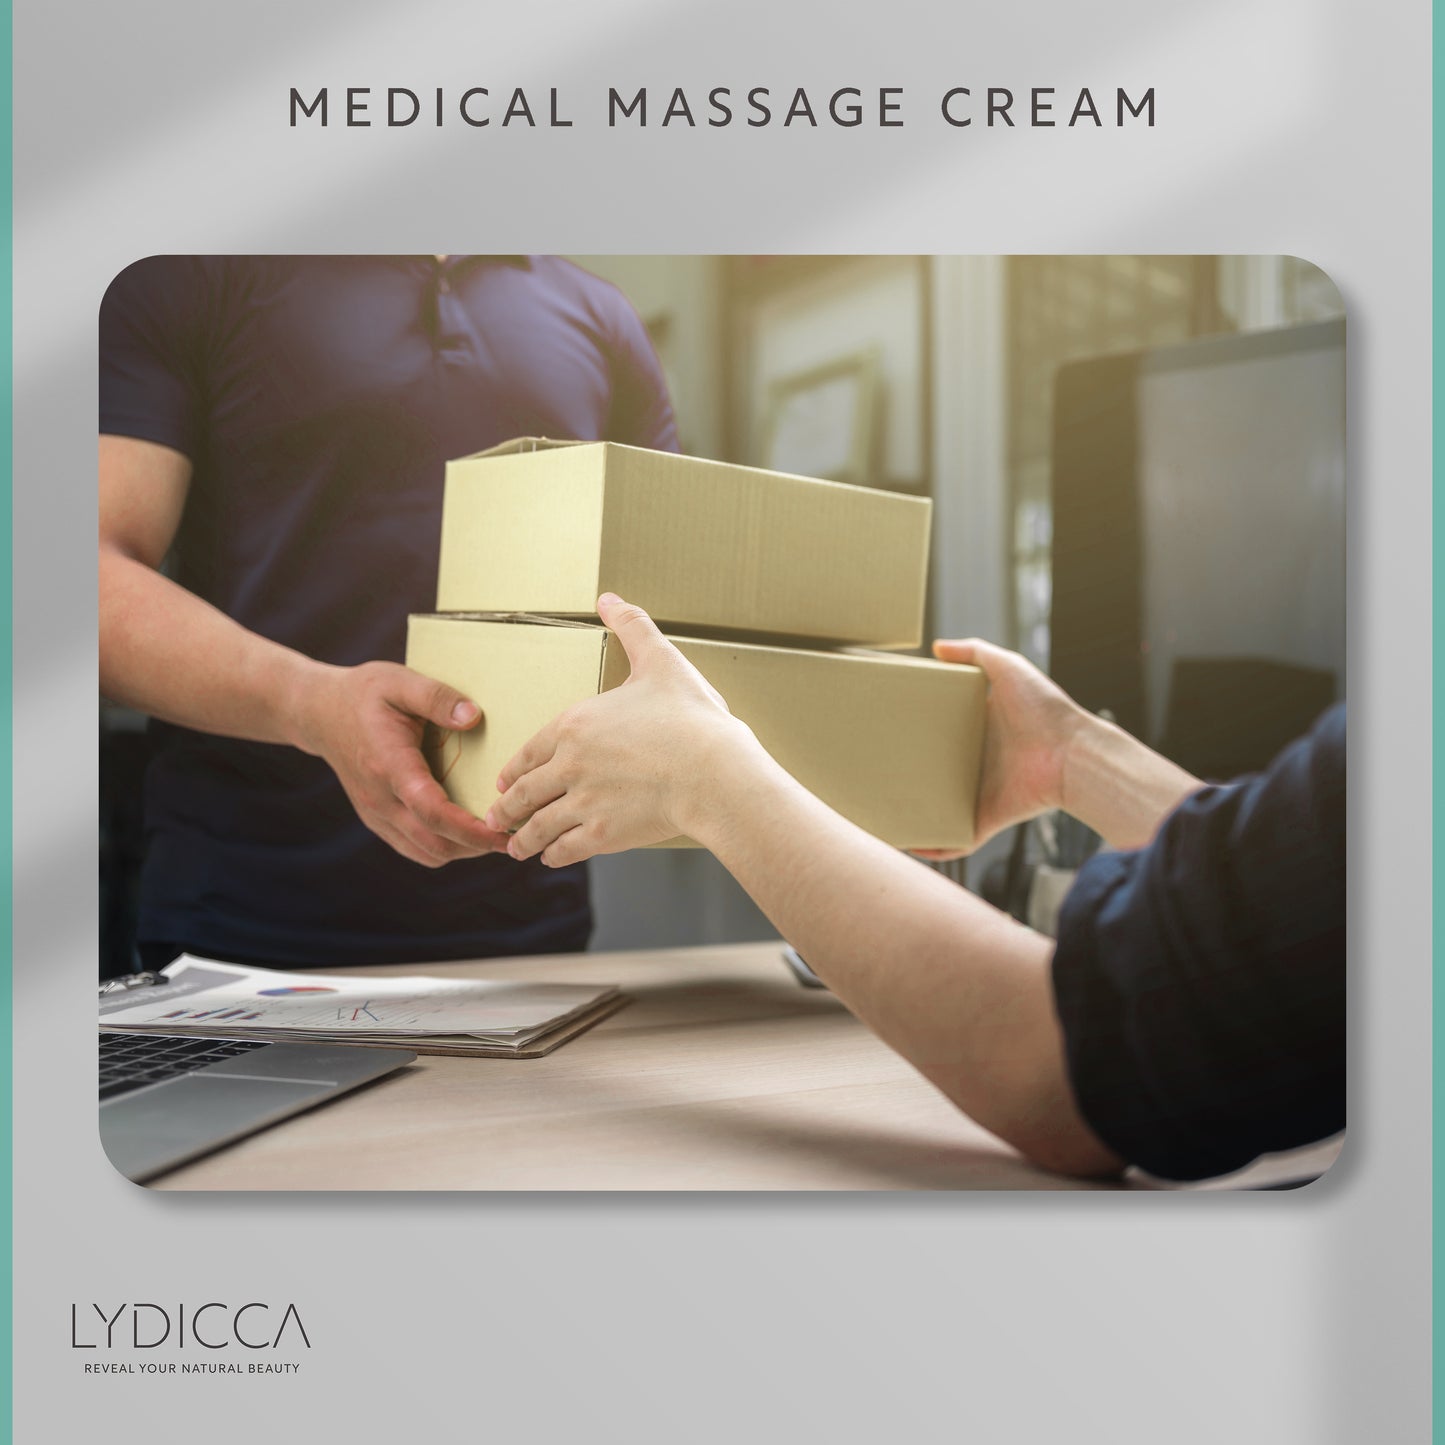 Medical Massage Cream – Rex